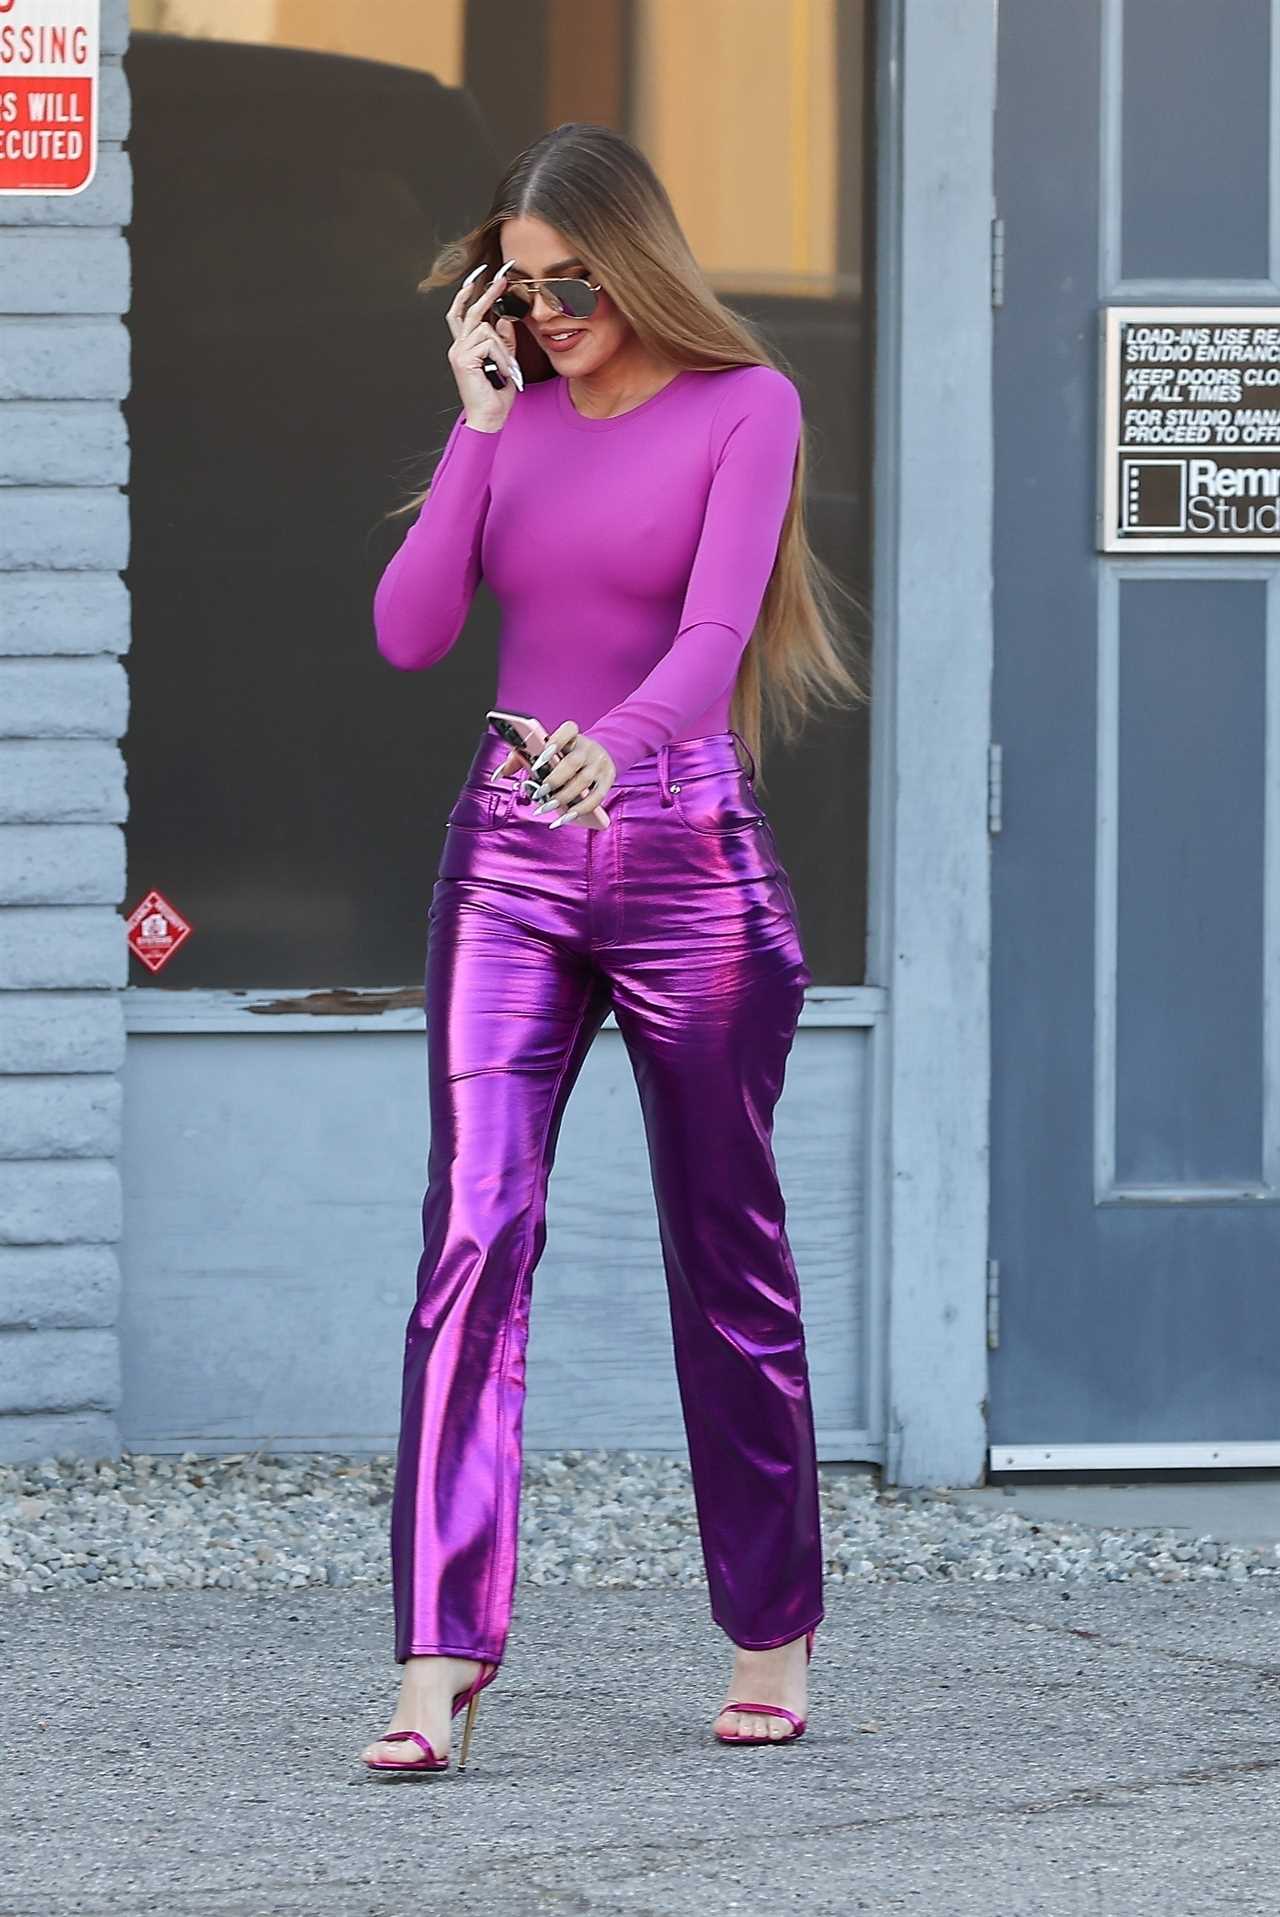 Khloe Kardashian suffers embarrassing wardrobe malfunction as she shows off shrinking legs & butt in shiny purple pants